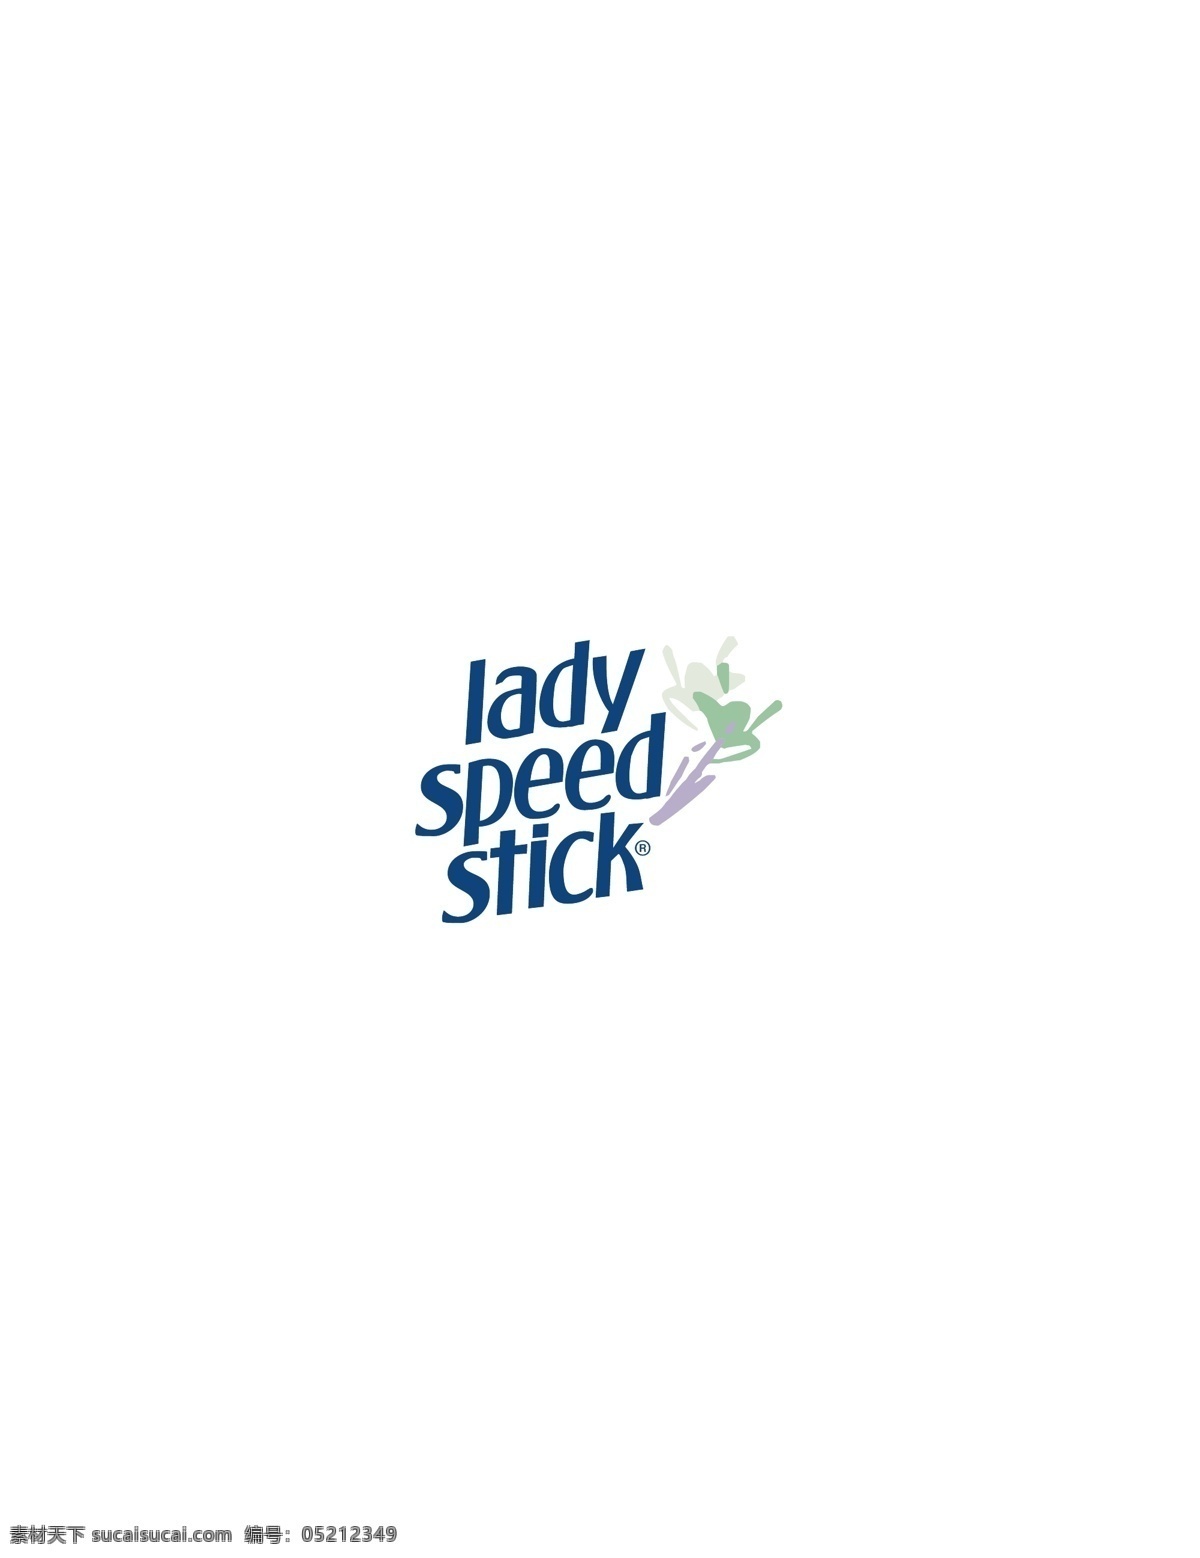 lady logo大全 logo 设计欣赏 商业矢量 矢量下载 speed stick 国外 知名 公司 标志 范例 标志设计 欣赏 网页矢量 矢量图 其他矢量图